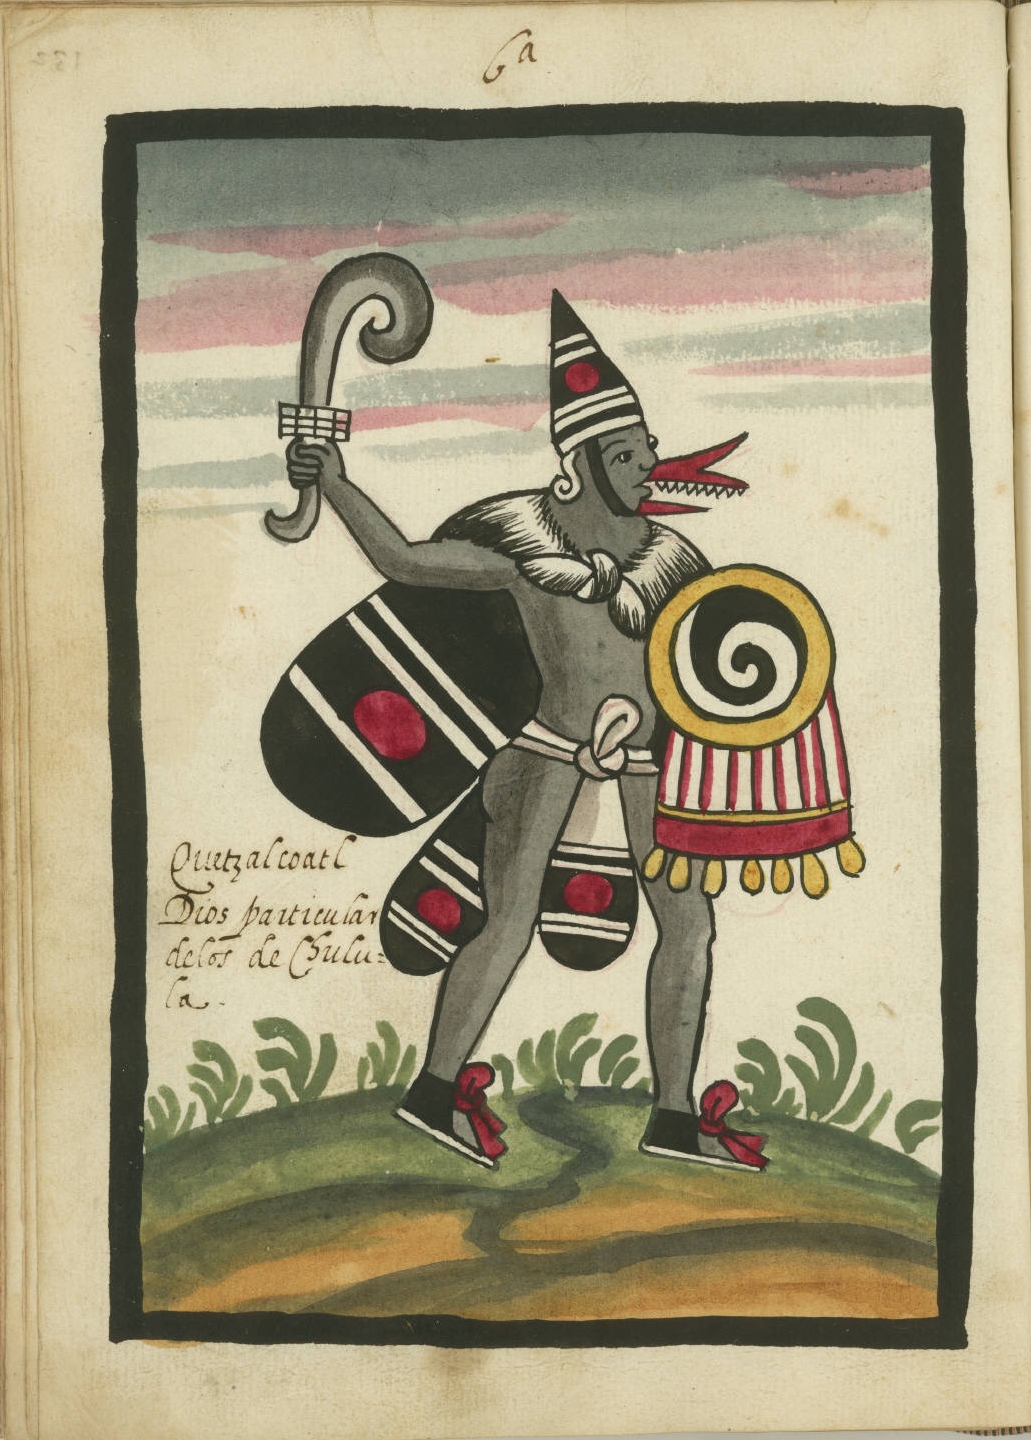 Quetzalcoatl, Dios particular de los de Chulula.